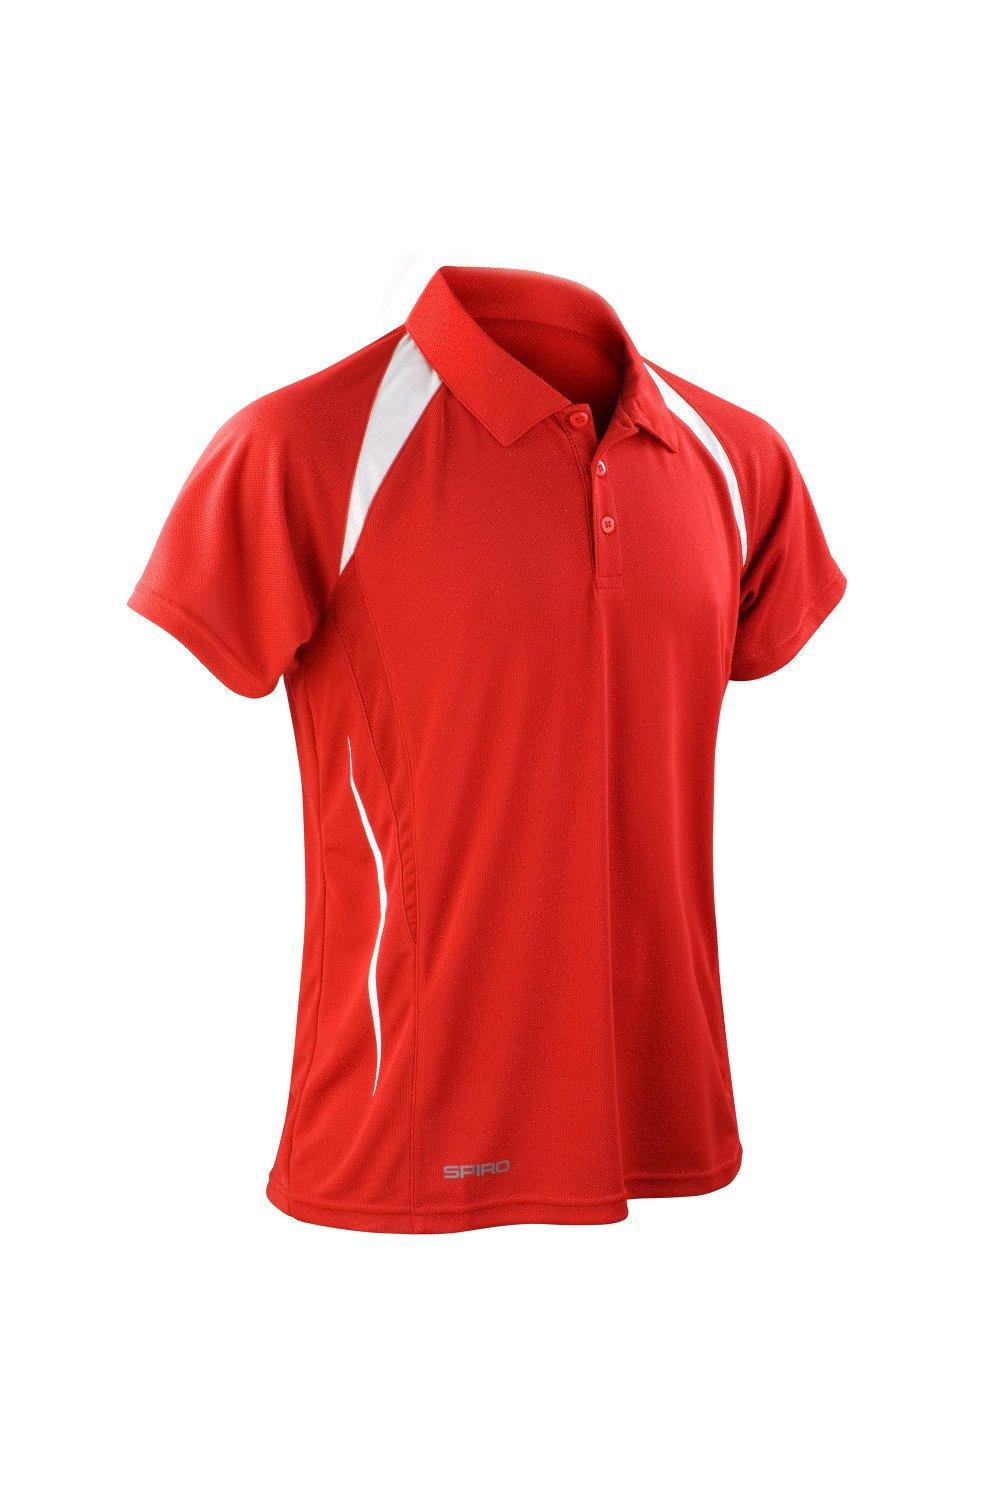 Рубашка поло Sports Team Spirit Performance Spiro, красный